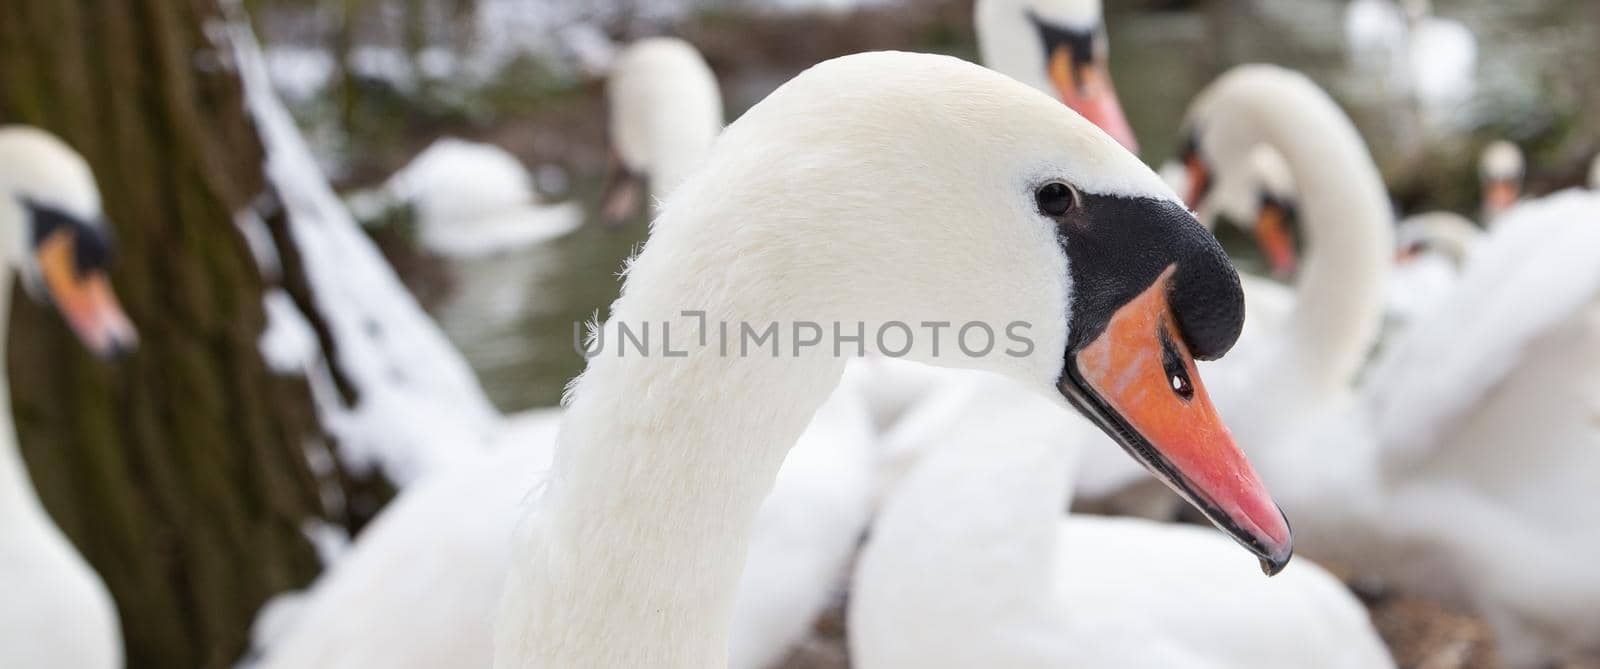 White swan, close up. UK Winter time